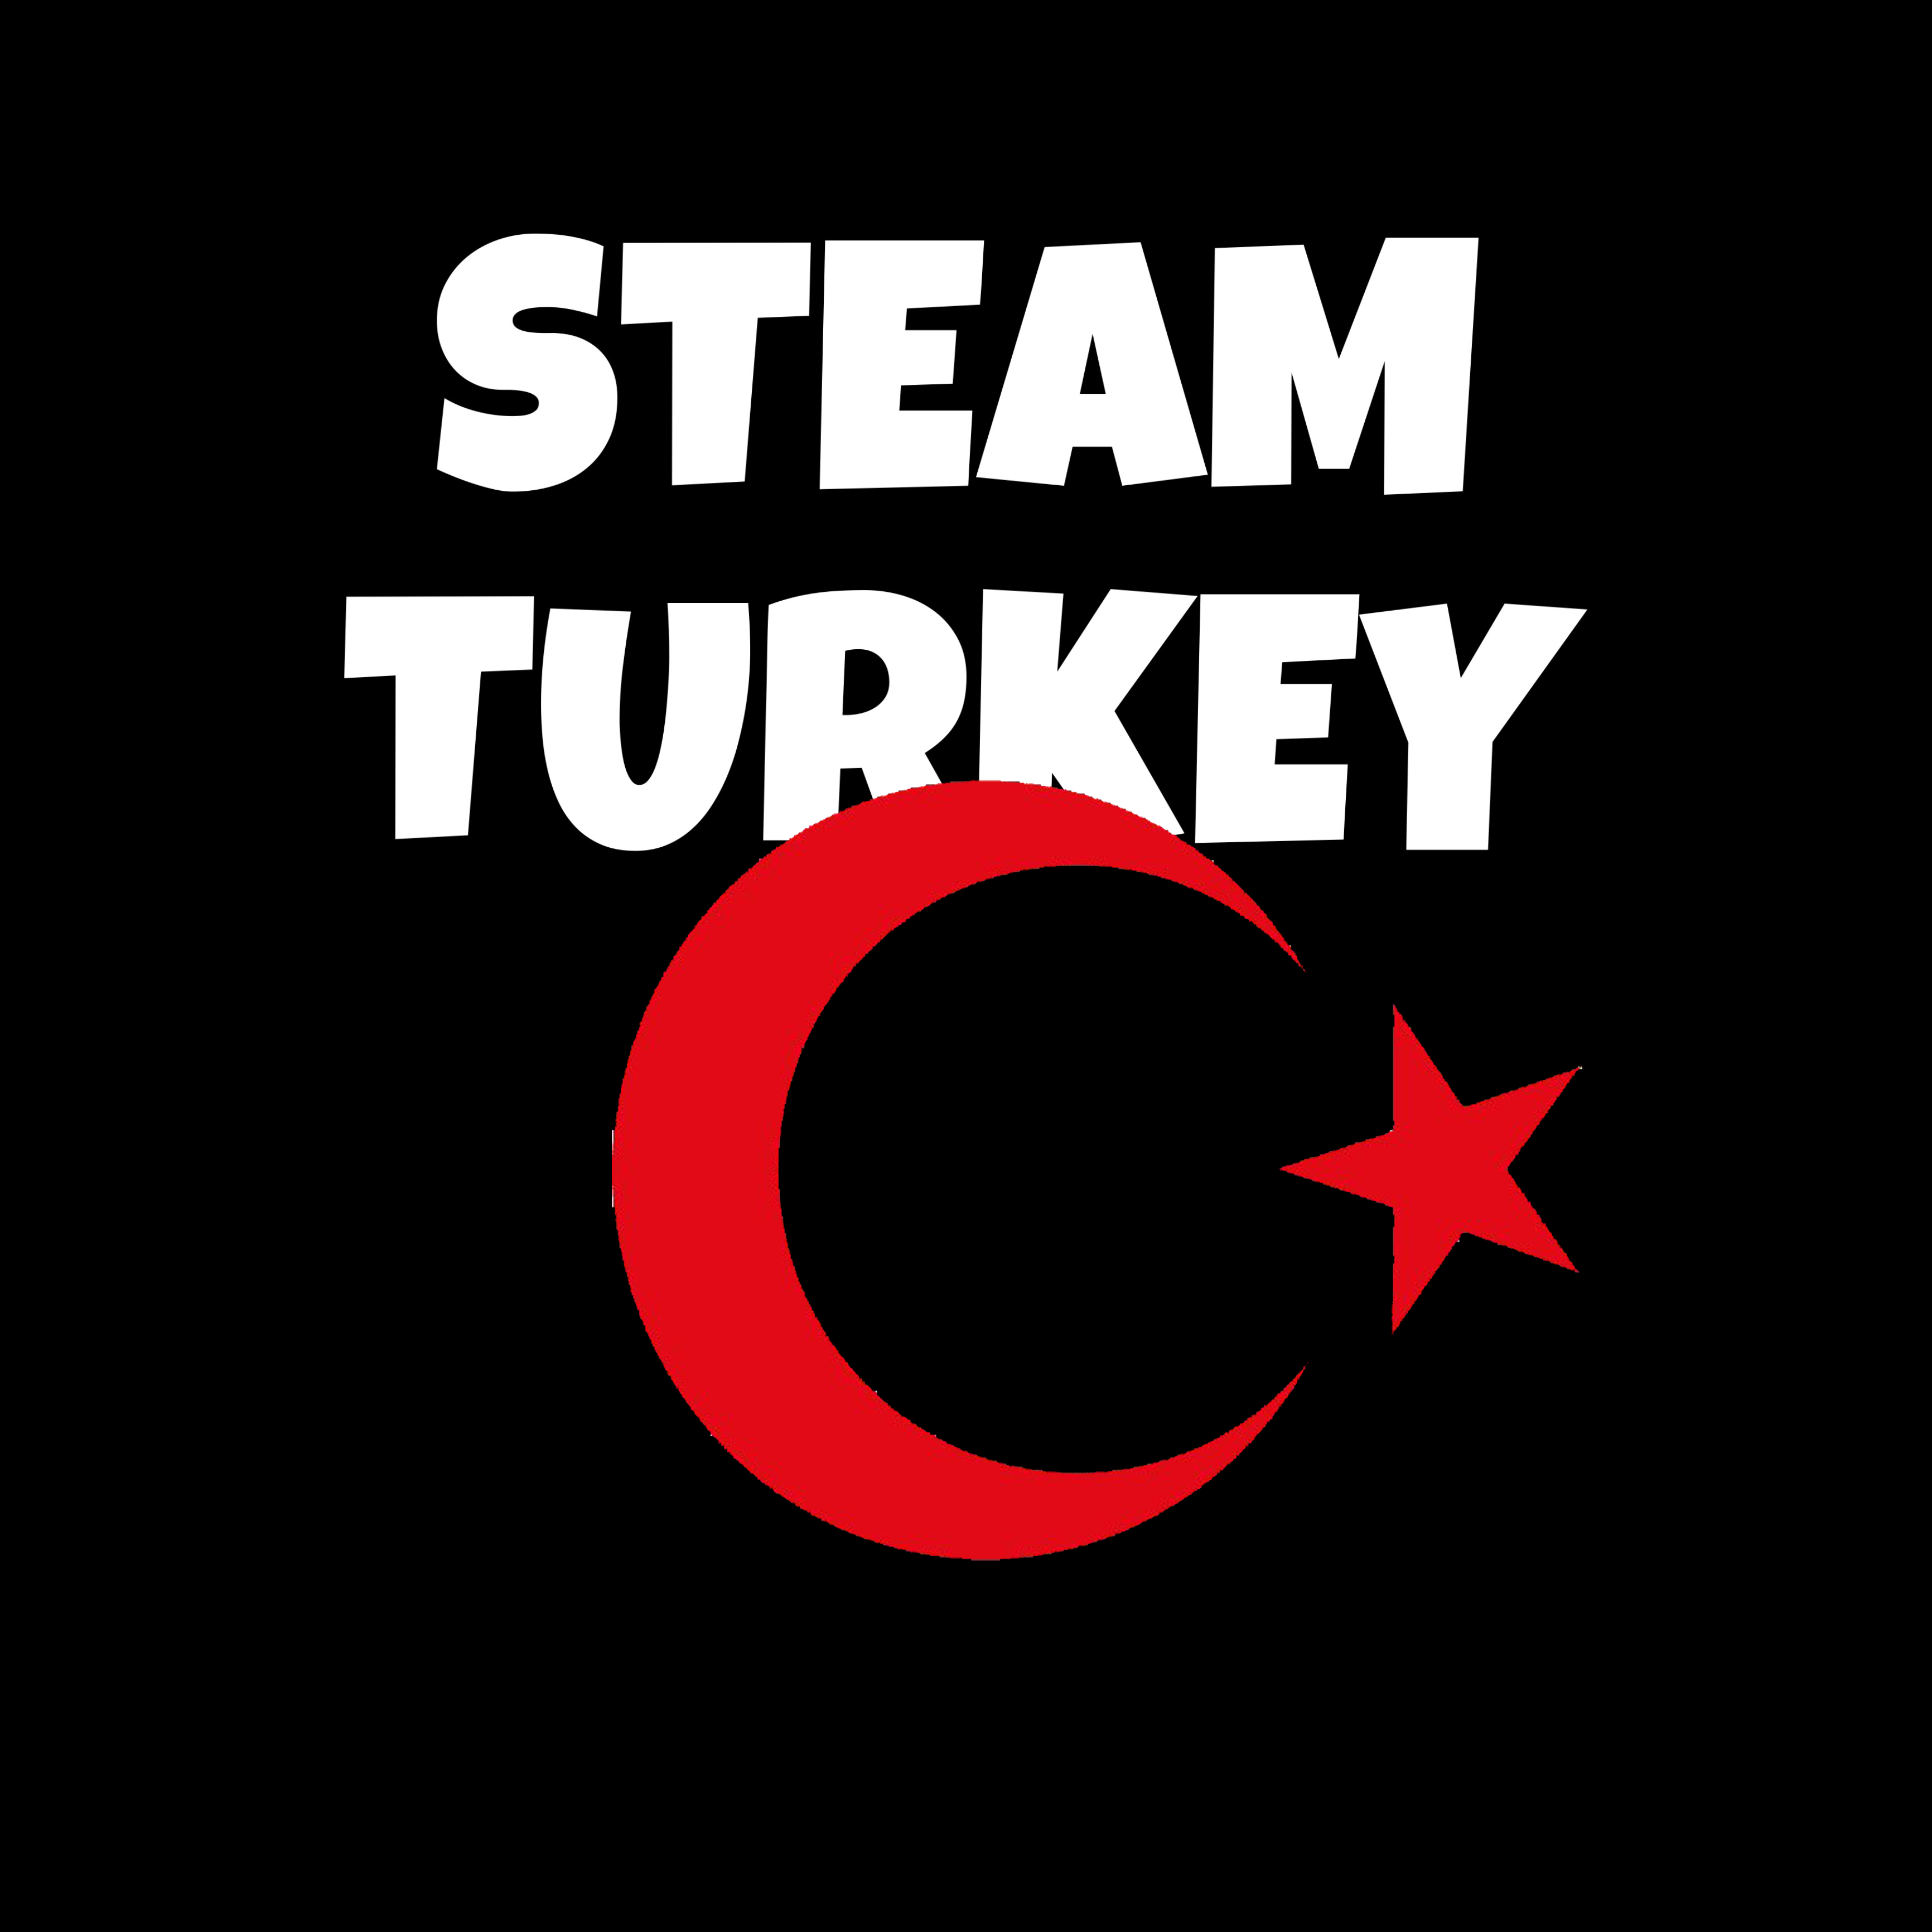 Игры стим турция. Турецкий стим. Турецкий аккаунт стим. Steam Gift Card Turkey. Турецкие цены в стиме.